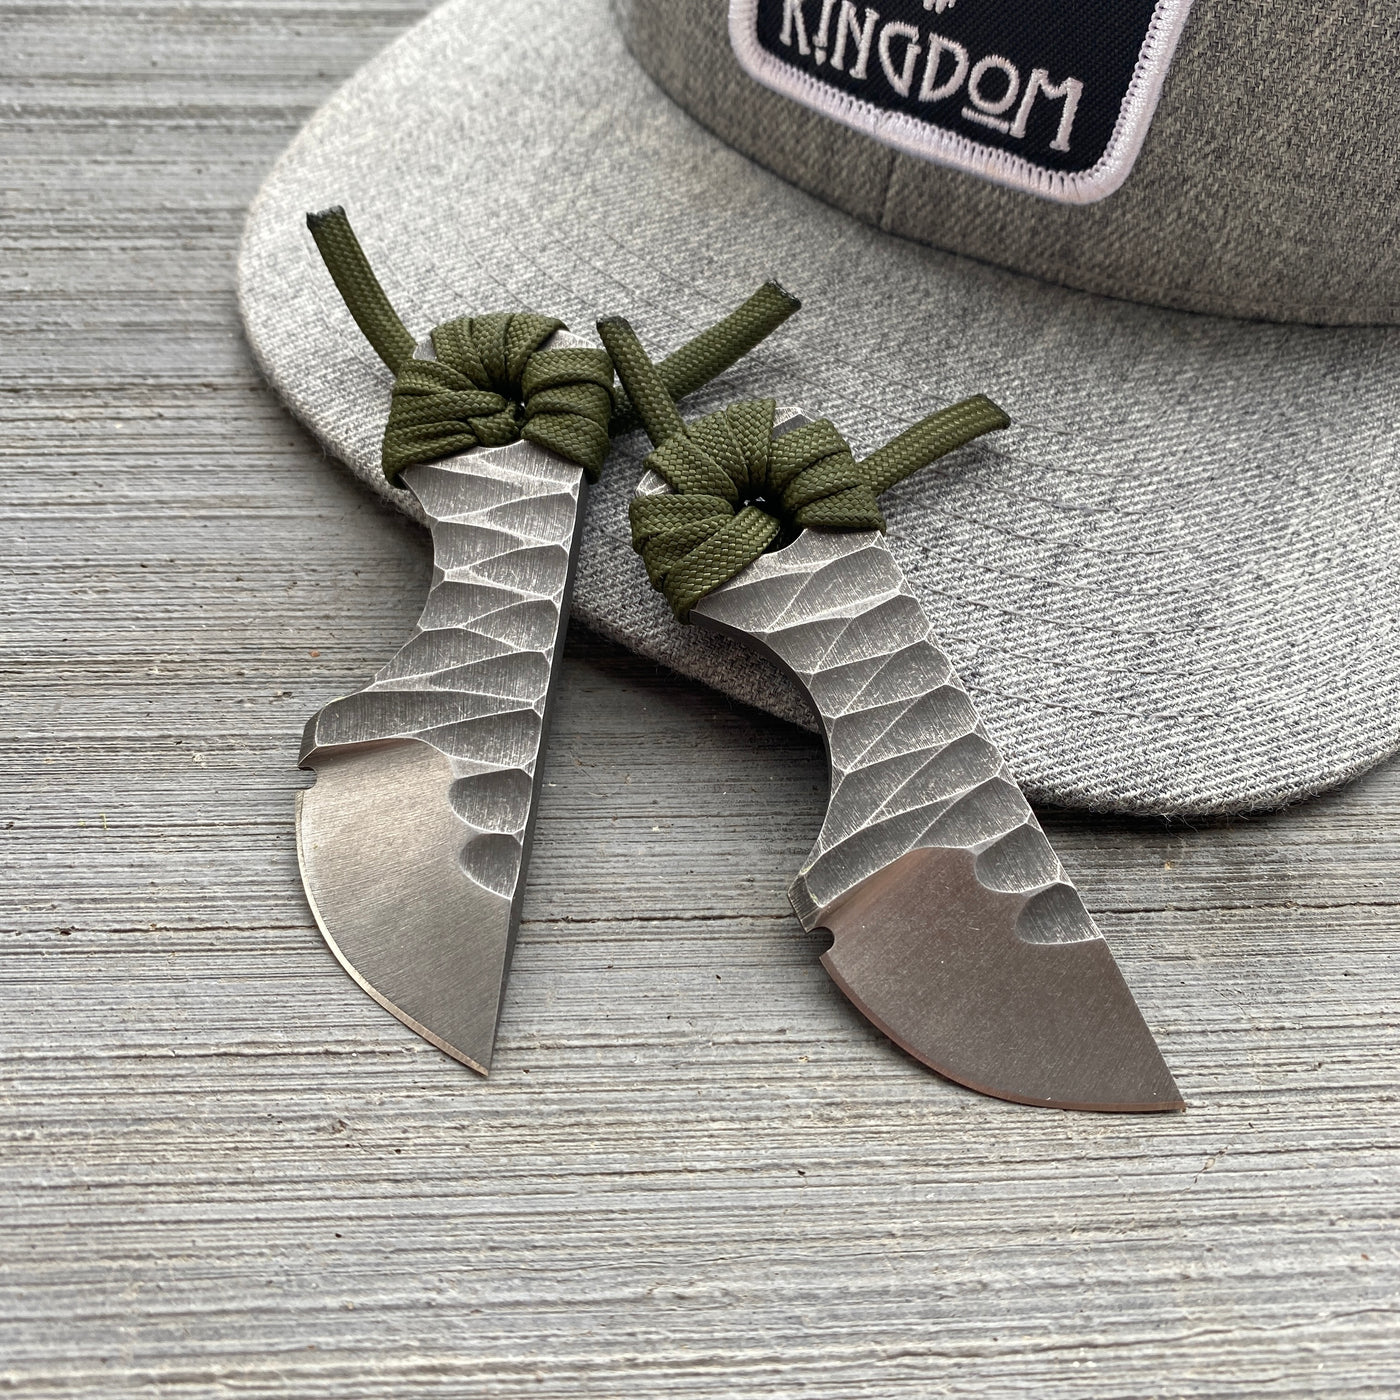 Kingdom Armory Full Custom - Jiblet Junior - Fixed Blade (necker)